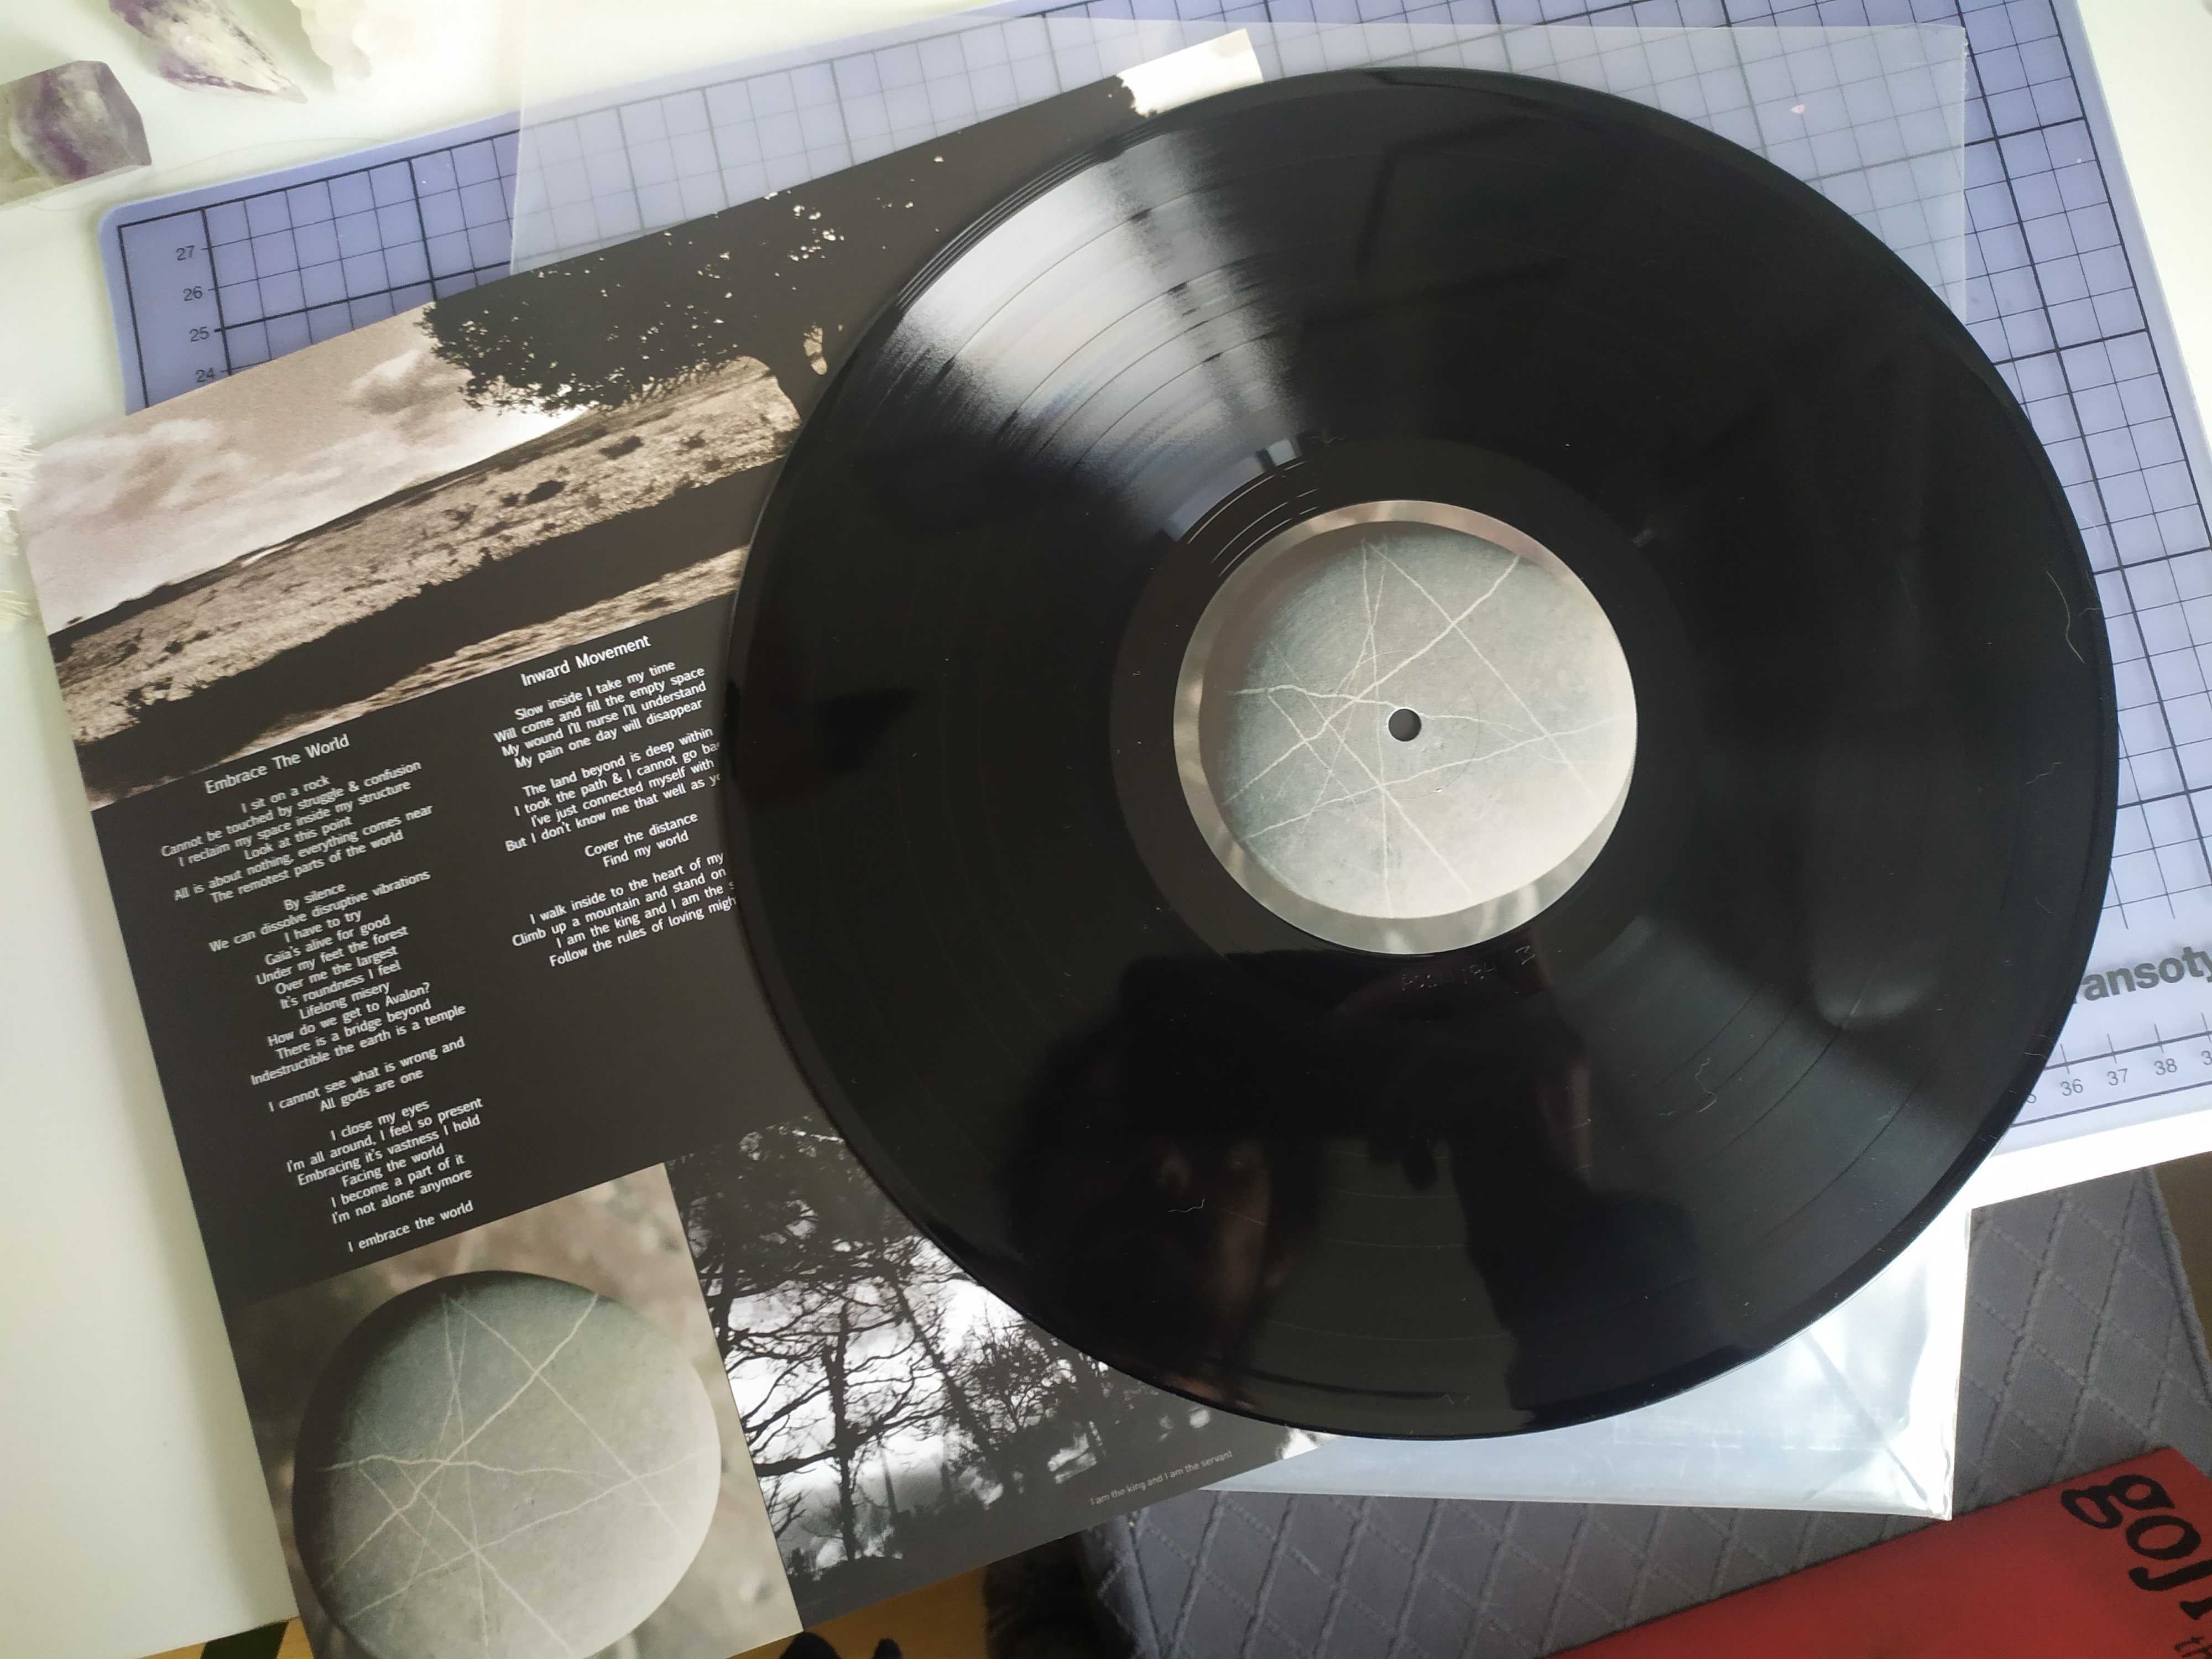 Gojira - The Link (Vinyl)